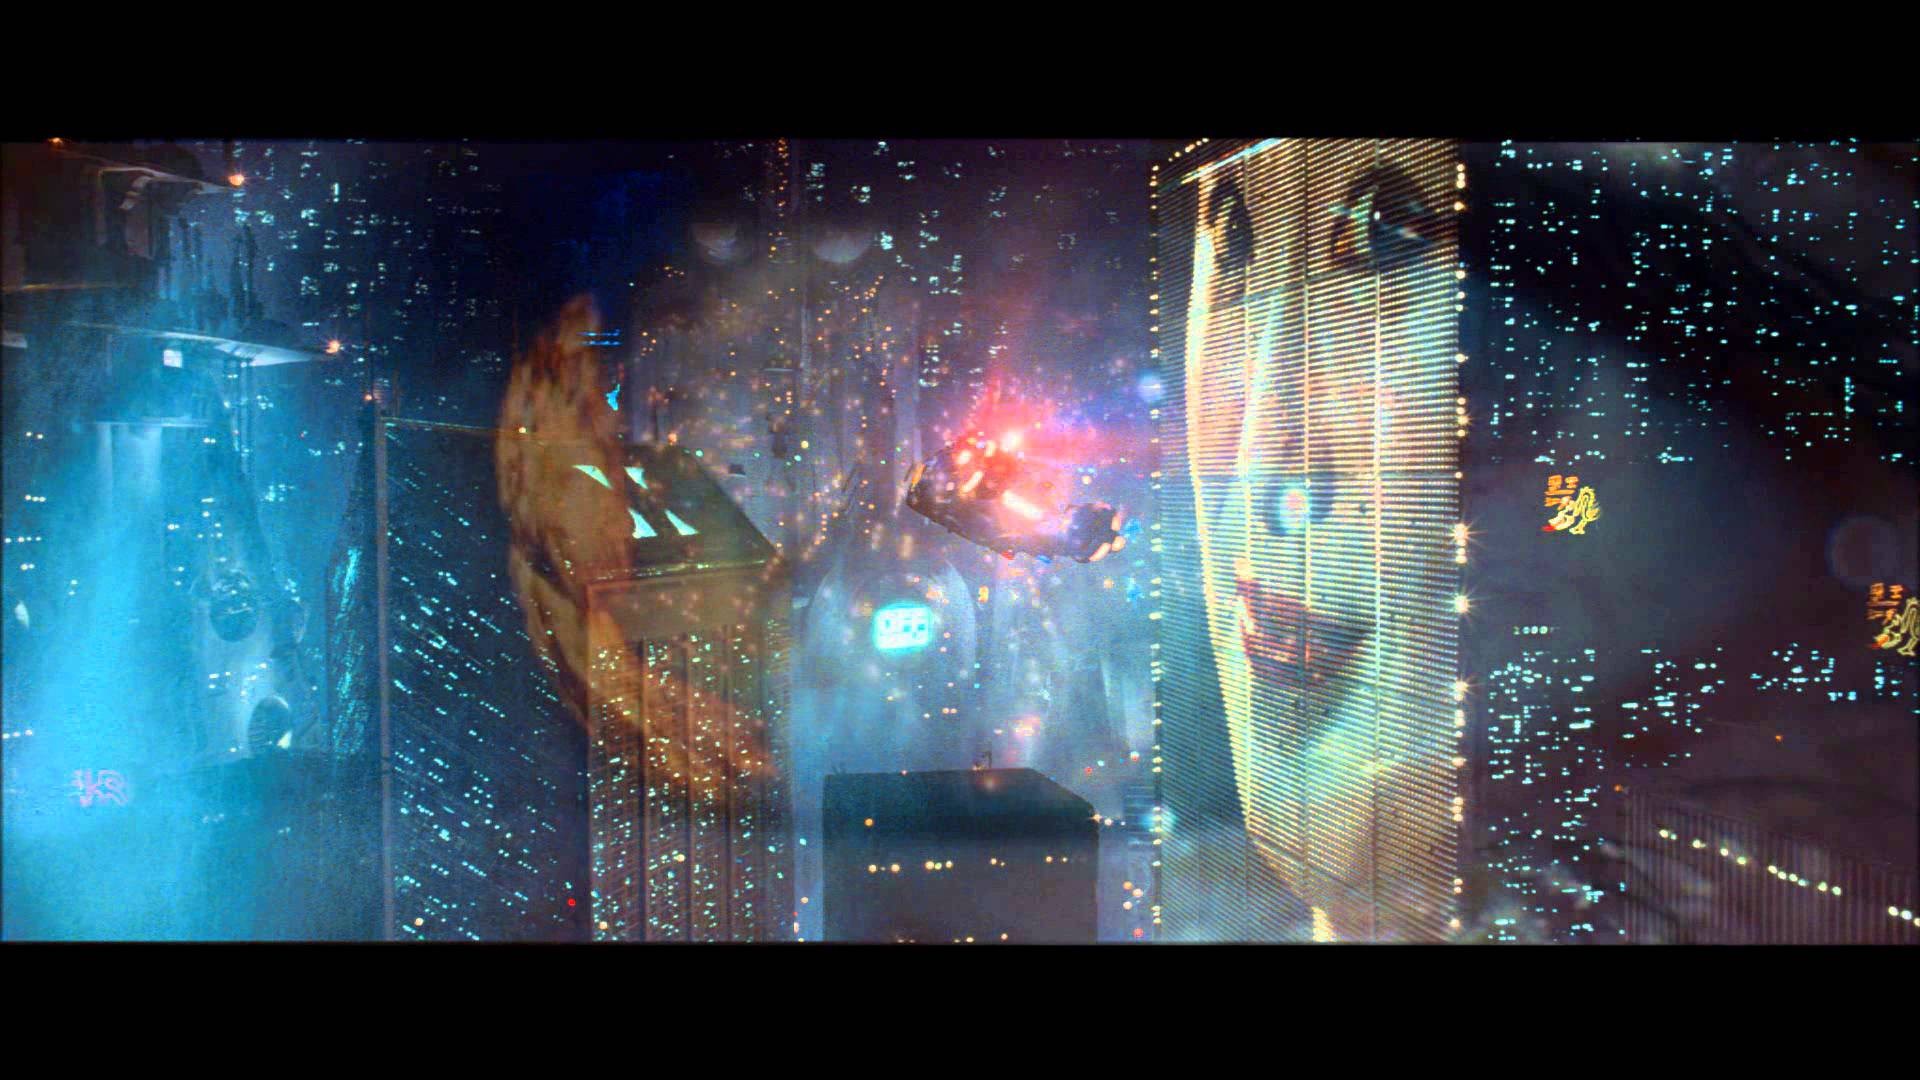 Blade Runner wallpaper ·① Download free full HD 